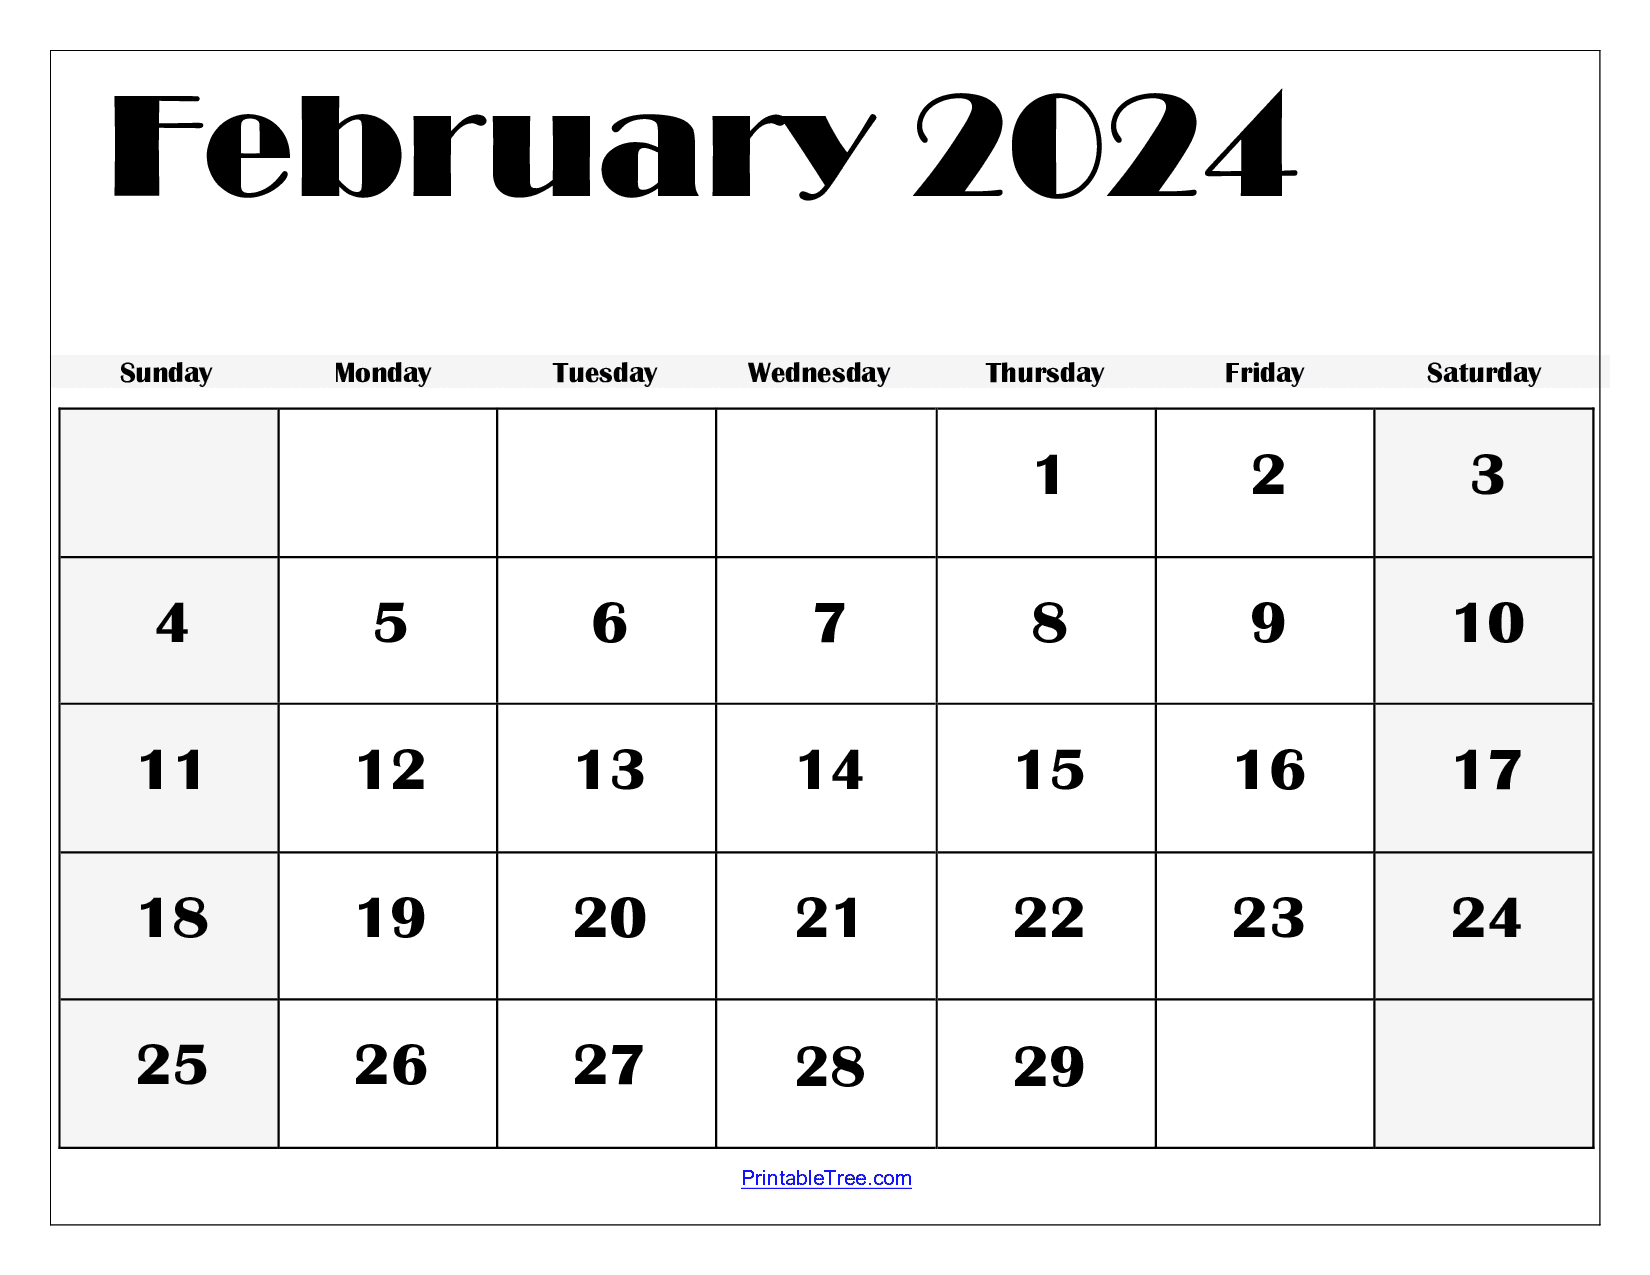 February 2024 Calendar Printable Pdf Template With Holidays for February 2024 Blank Printable Calendar